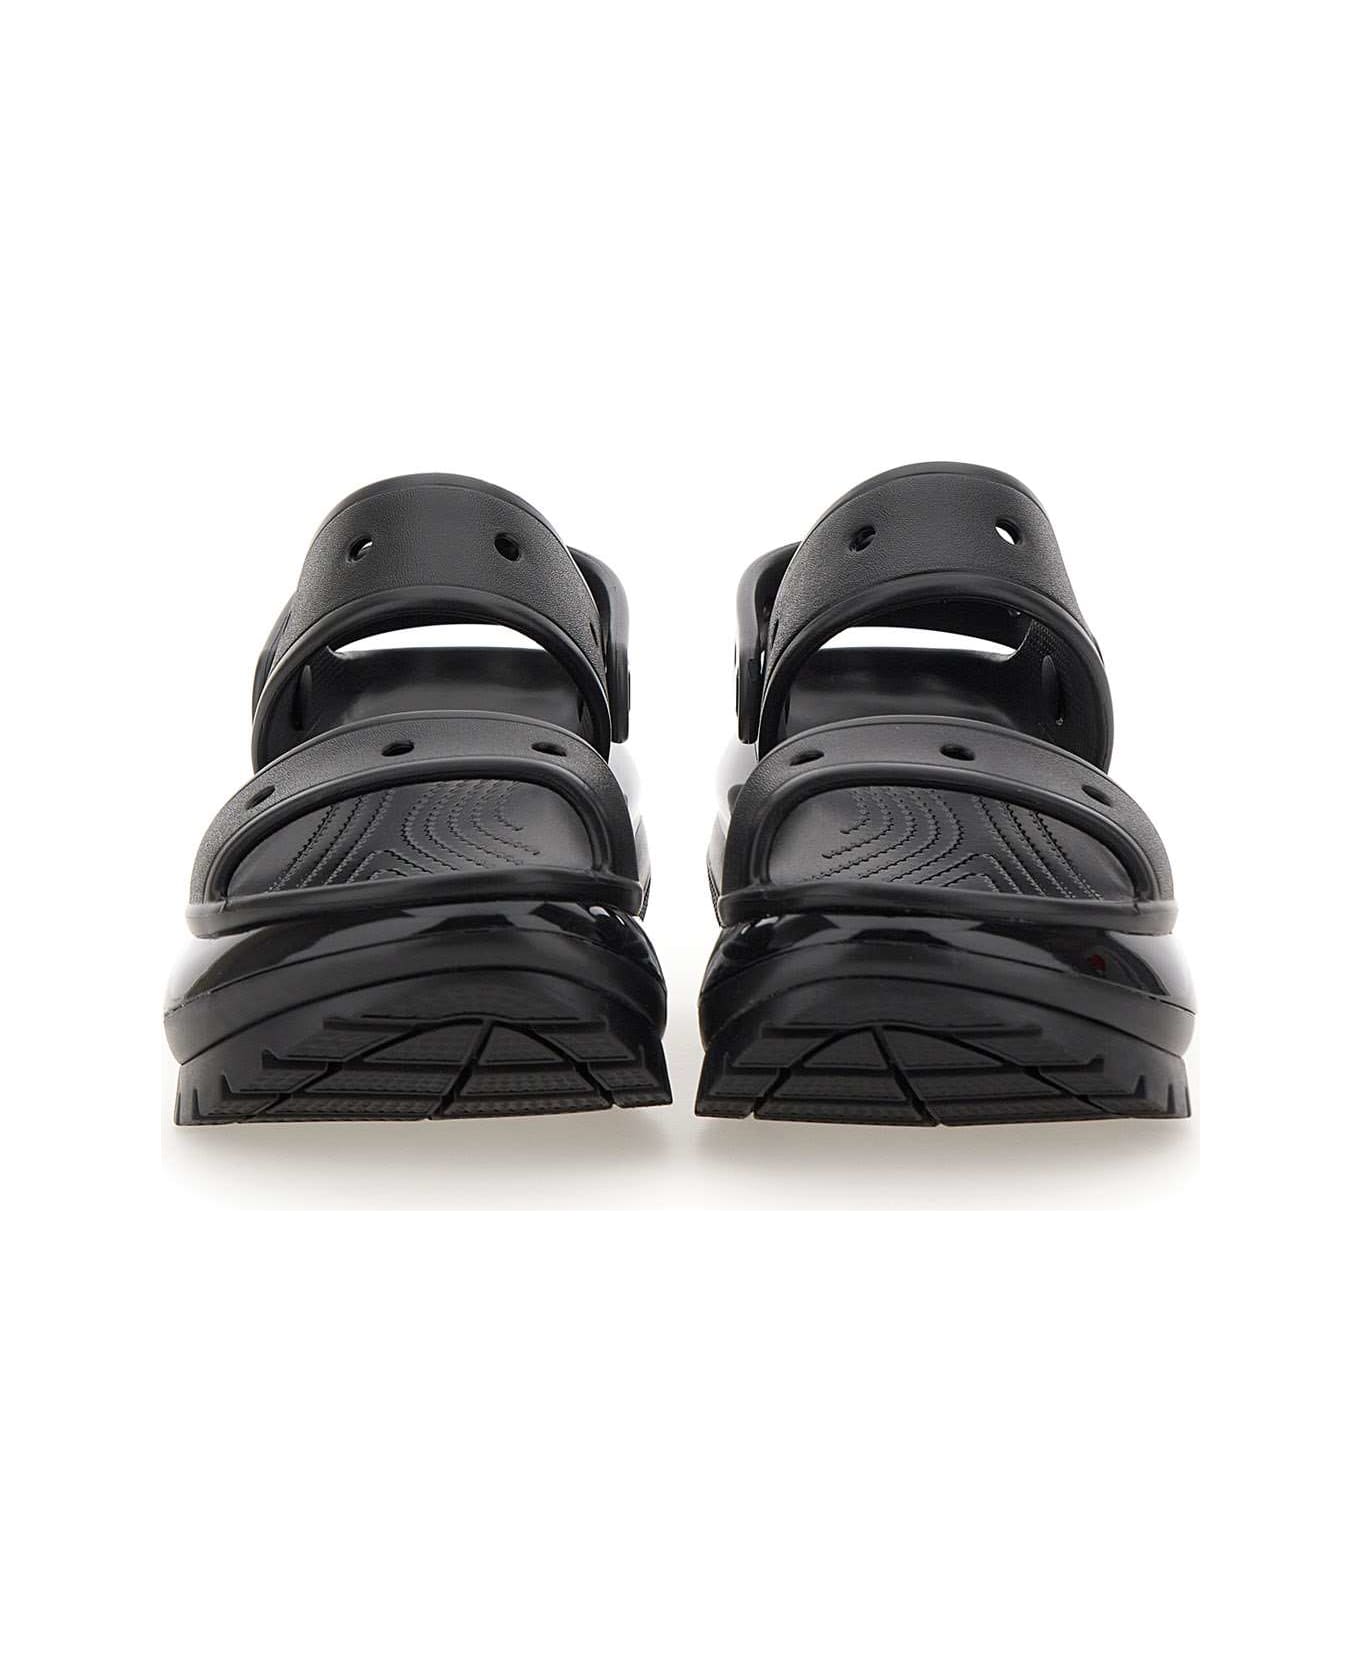 Crocs 'mega Crush Sandal' Sandals - Blk Black その他各種シューズ